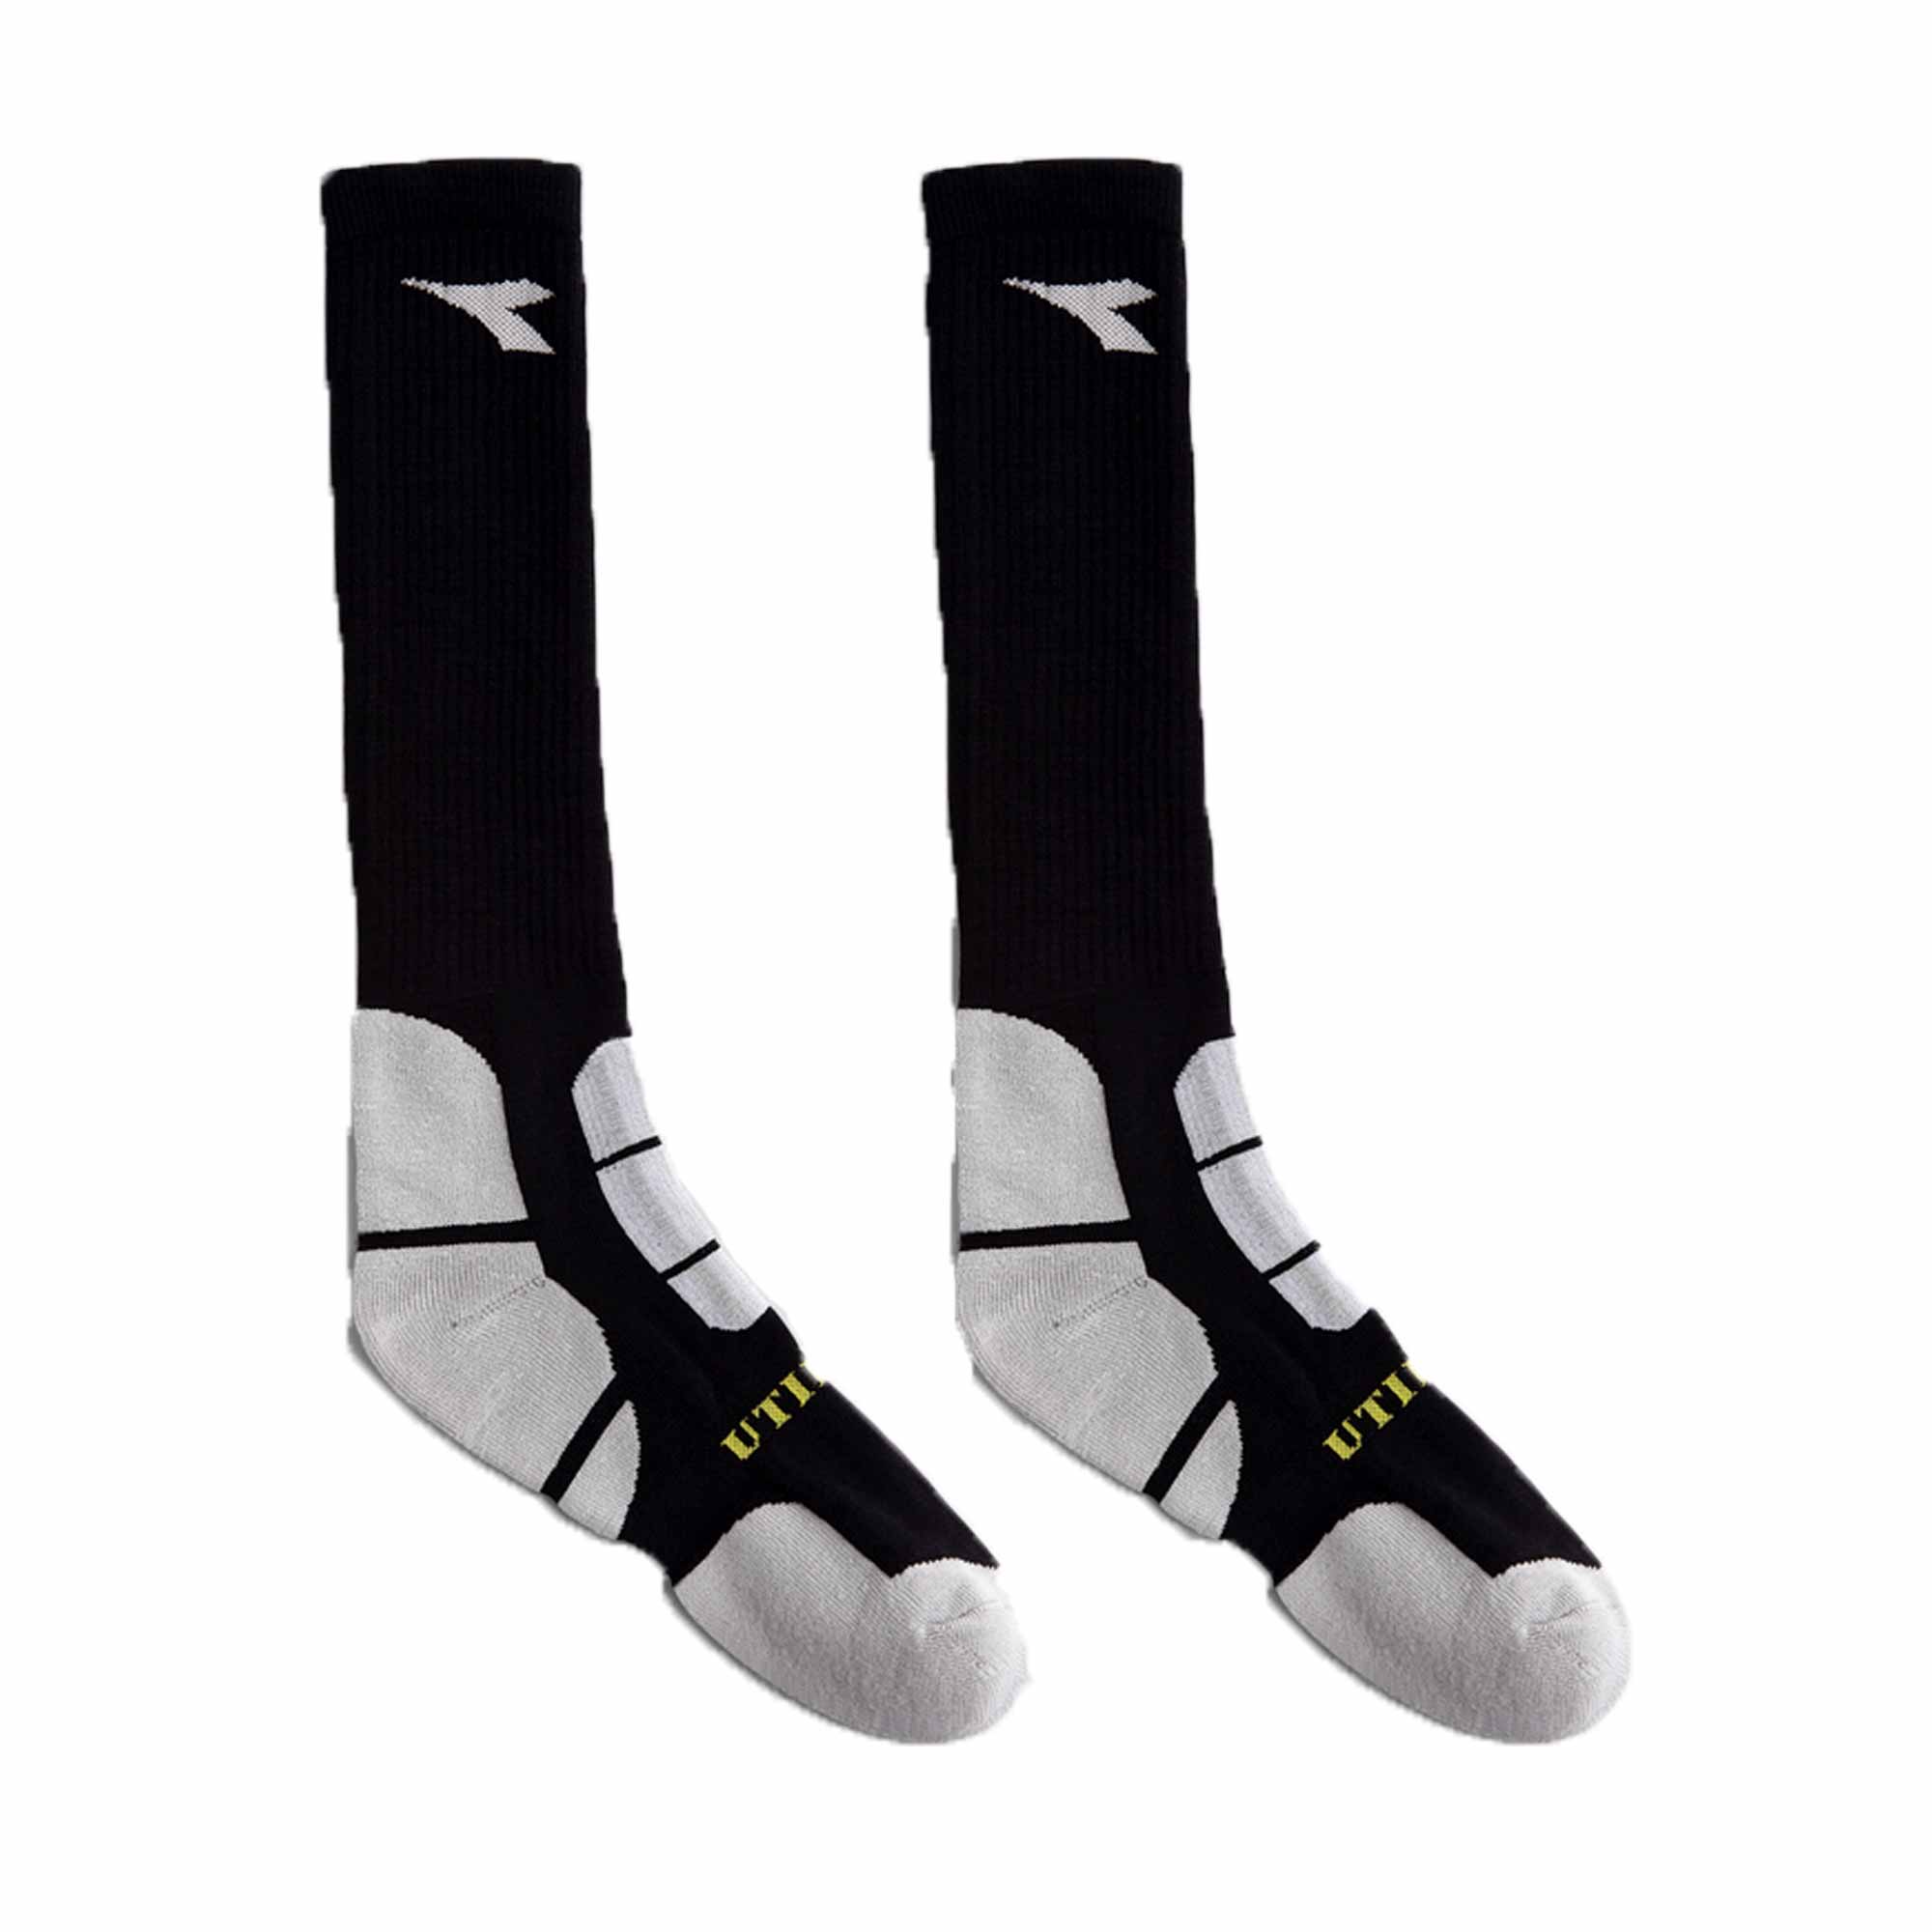 Calzini Diadora Merinos Winter Socks